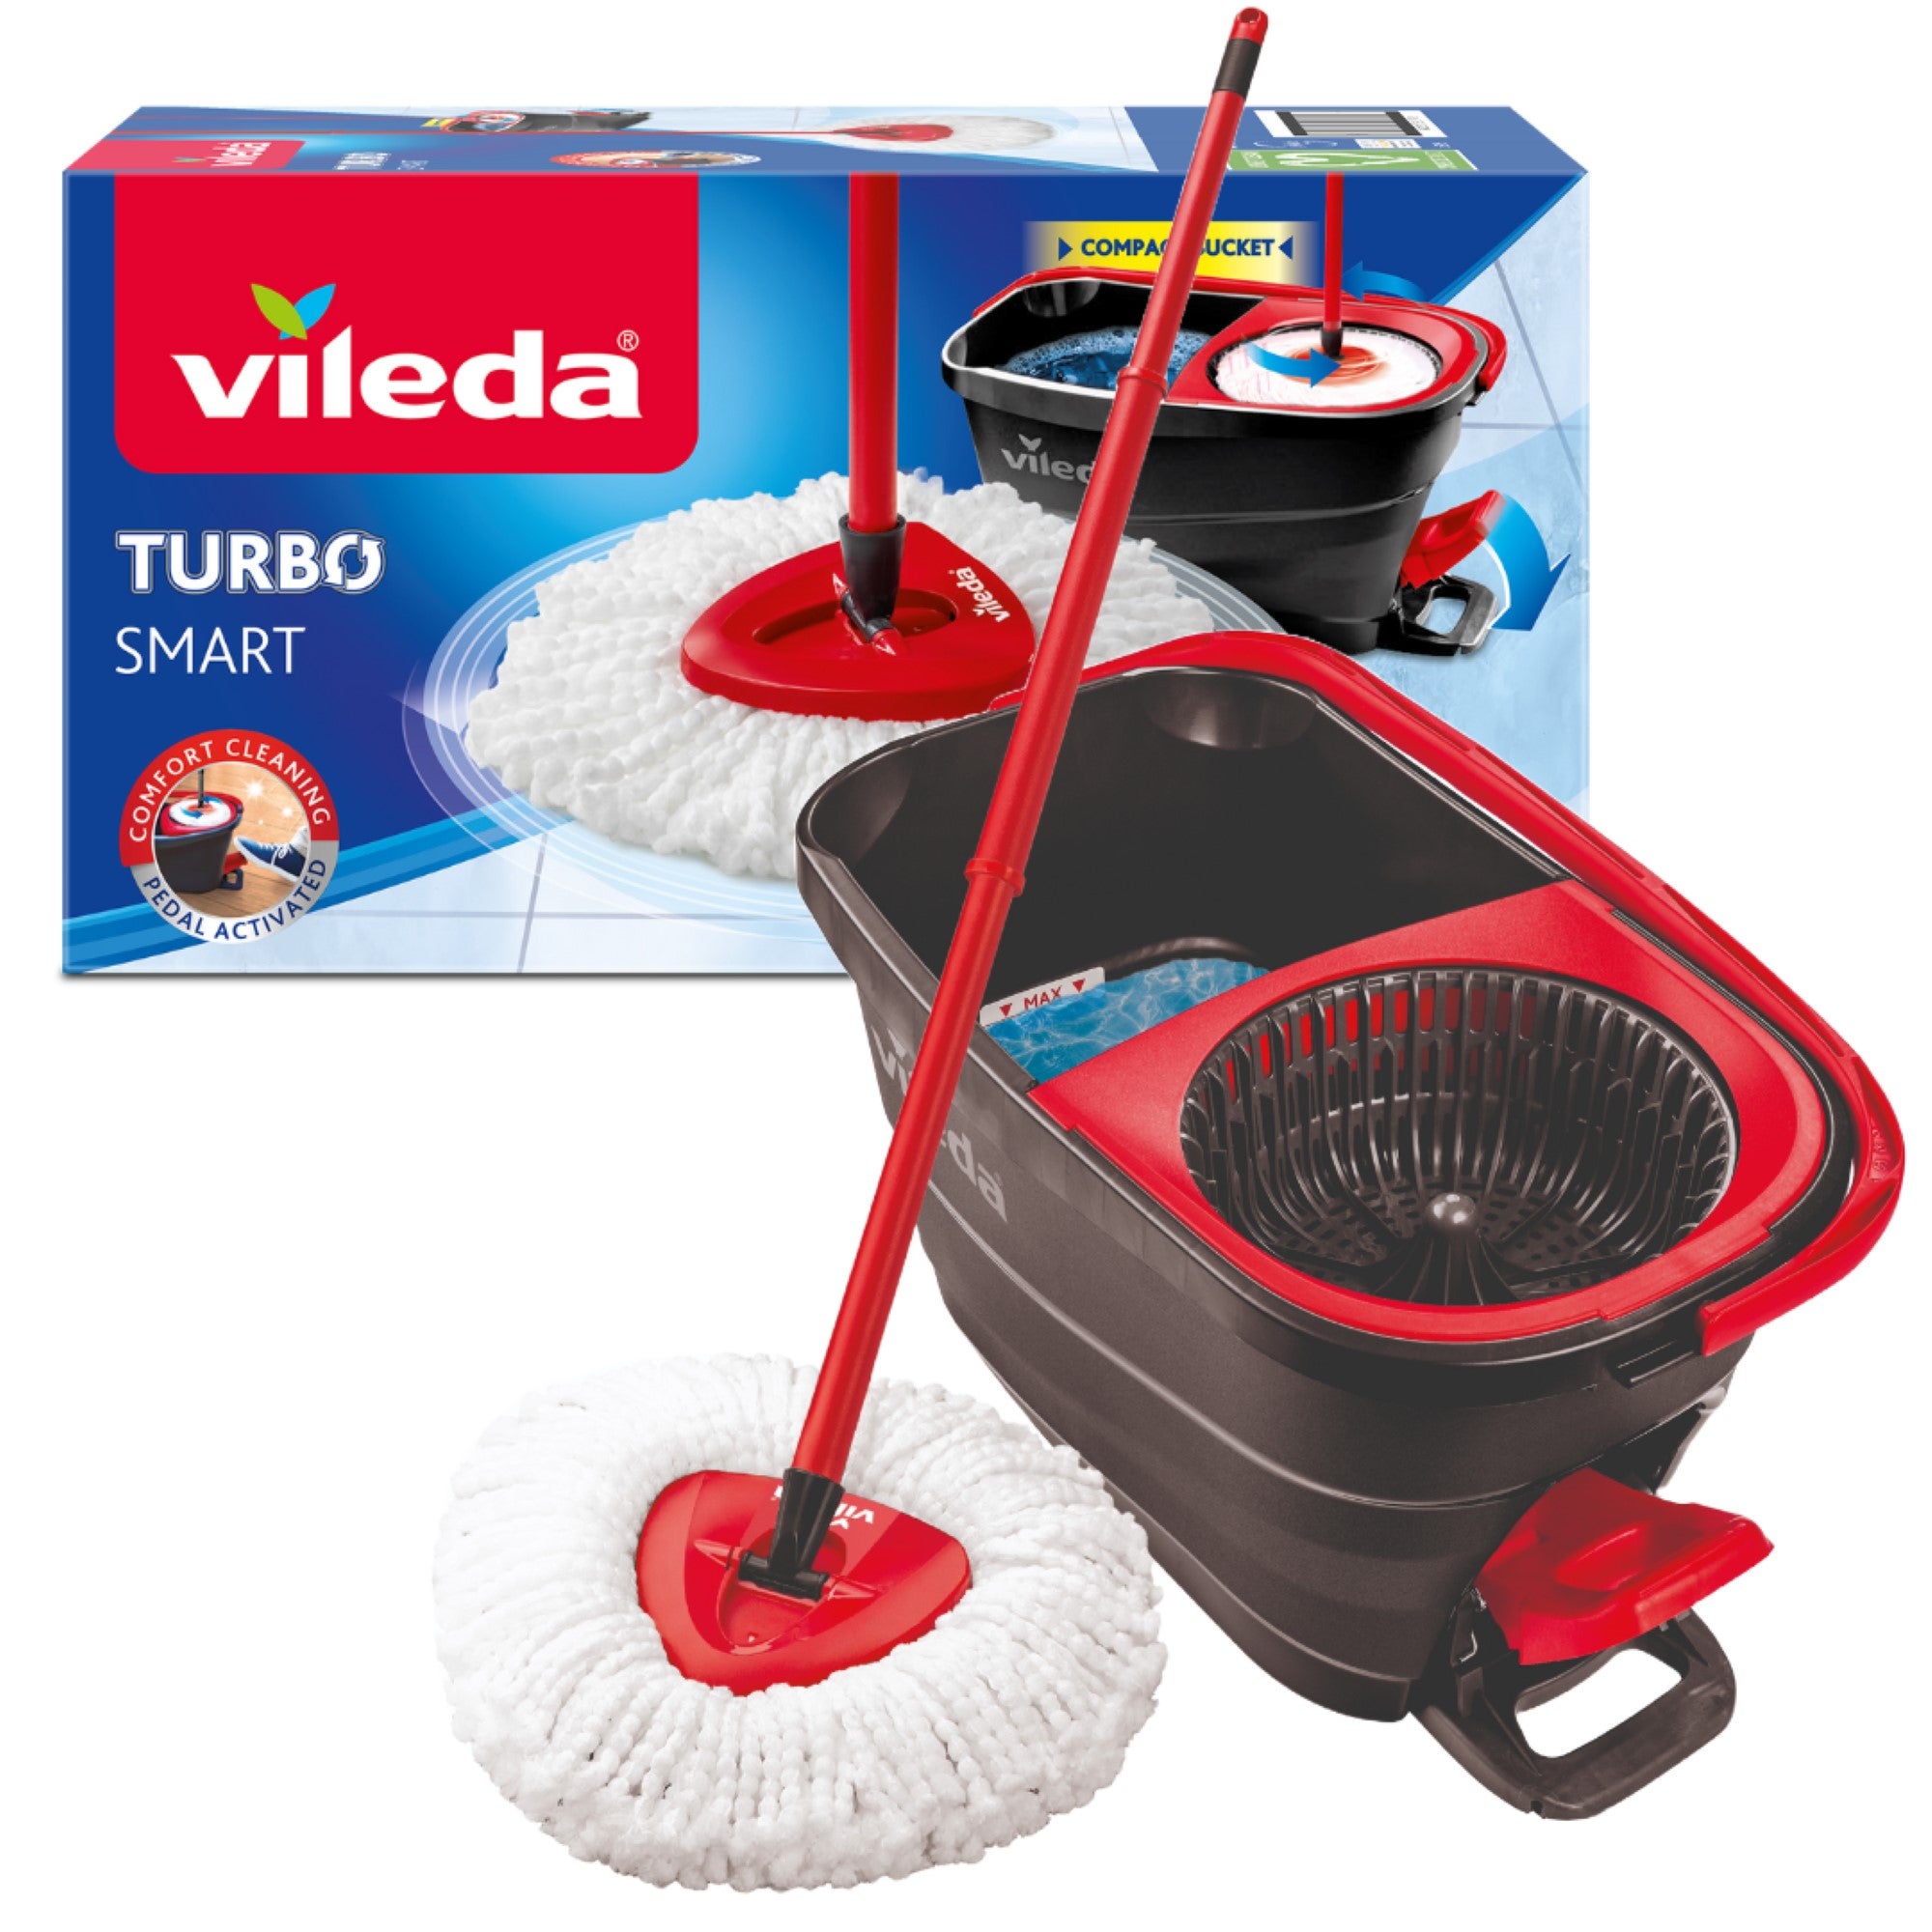 Vileda Turbo Mop and Bucket Set